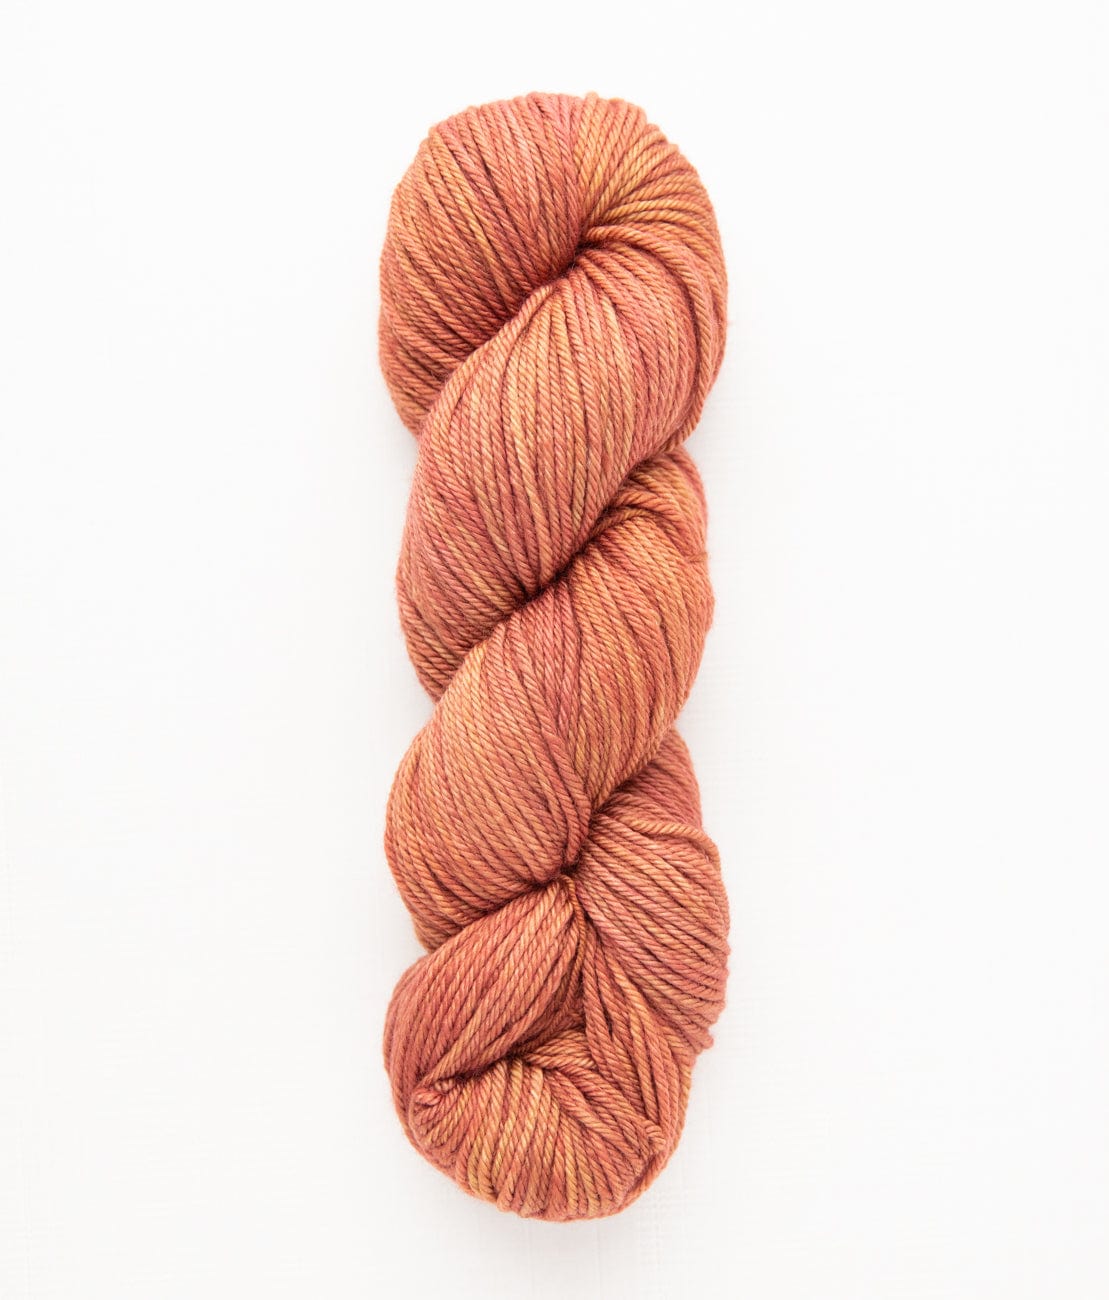 Ashford Weaving Needles - SweetGeorgia Yarns